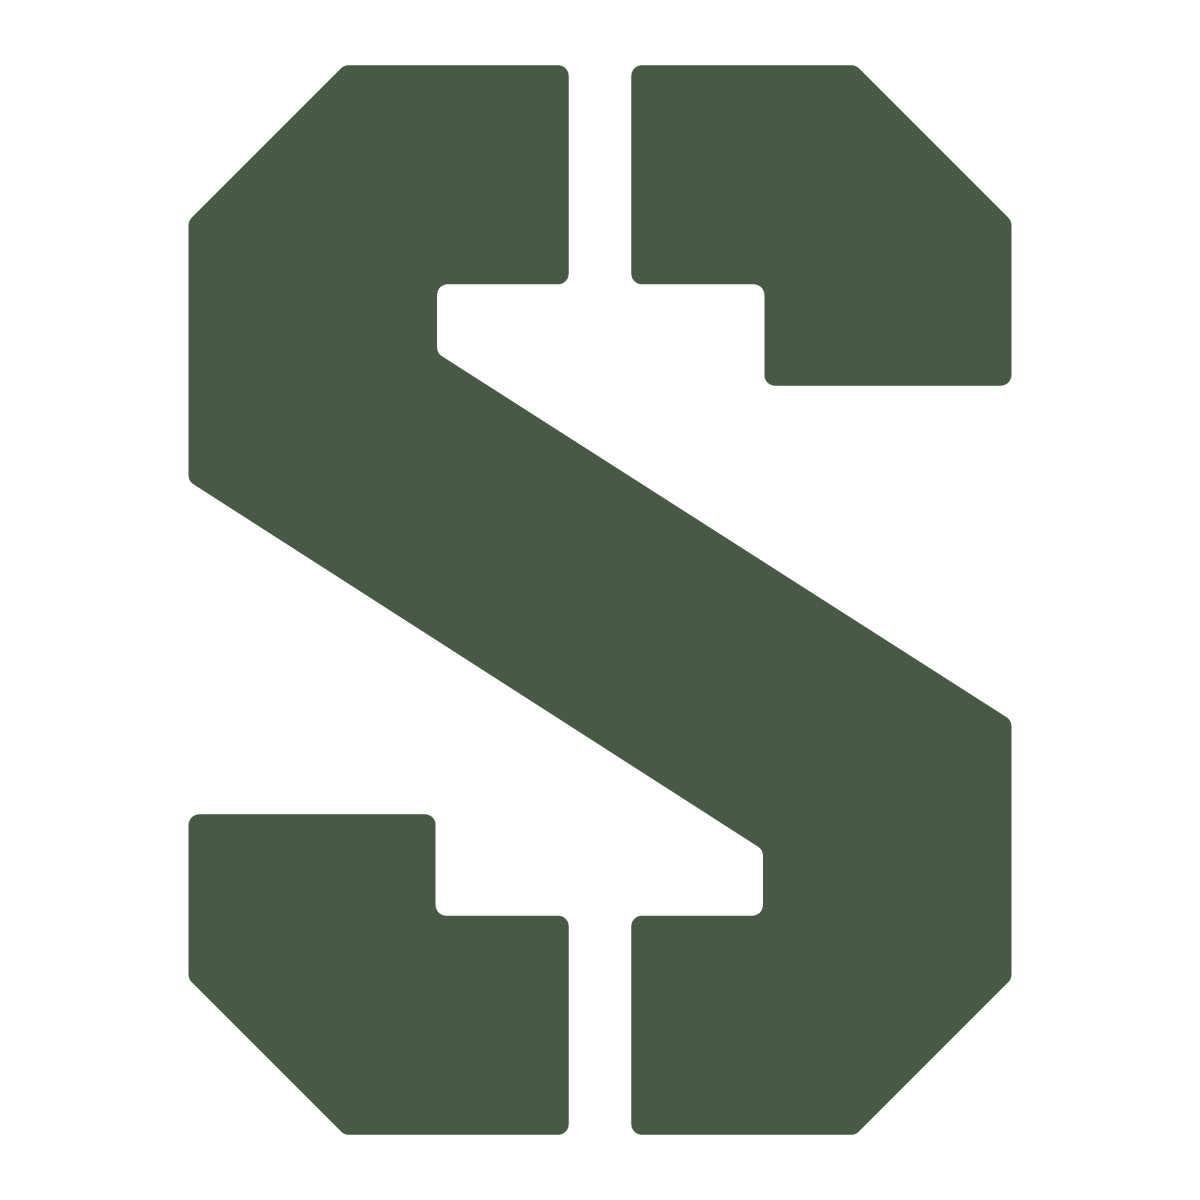 SERGEANTS-S-logo-armygreen